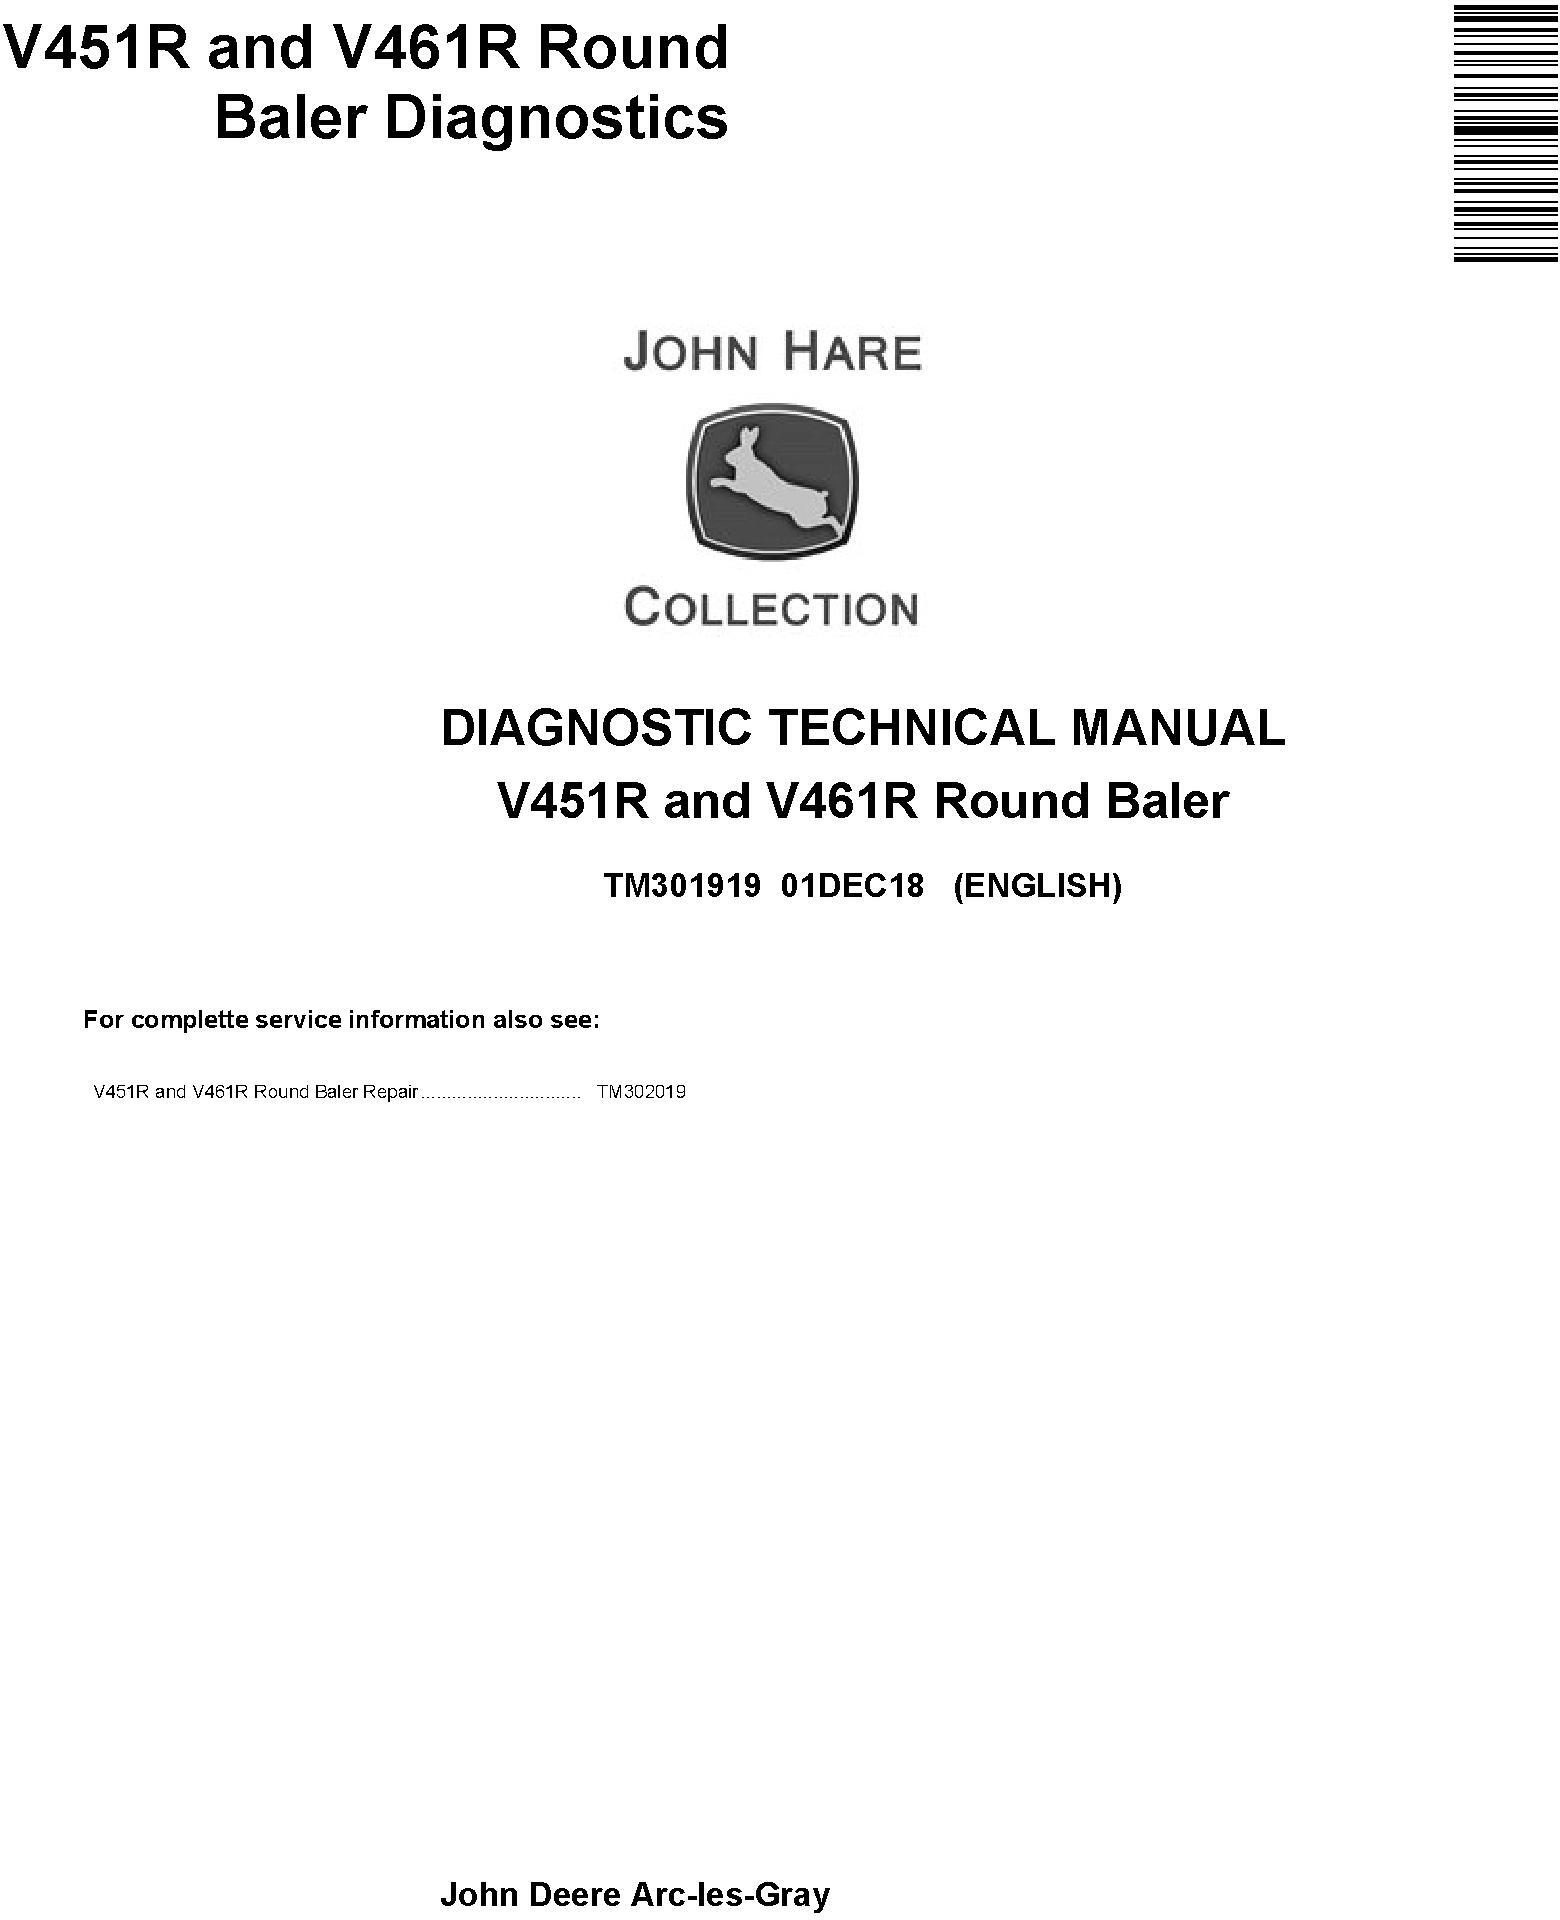 John Deere V451R V461R Round Baler Diagnostic Technical Manual TM301919